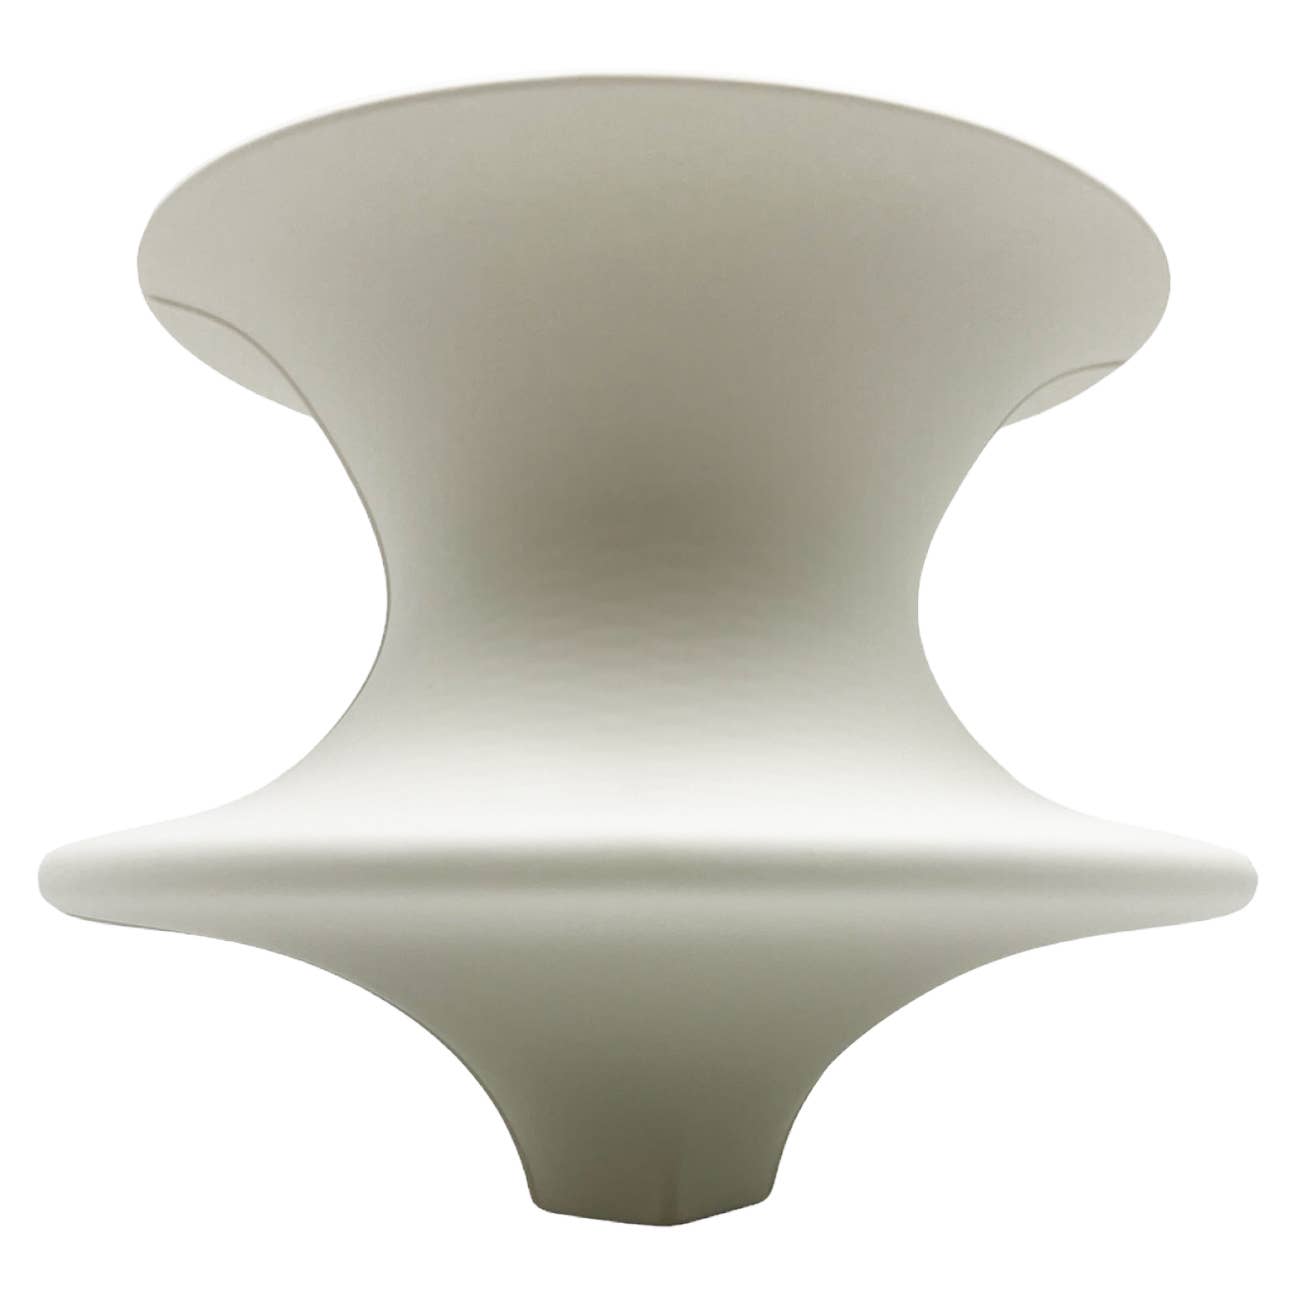 8" High Modern Ceramic Vase in White